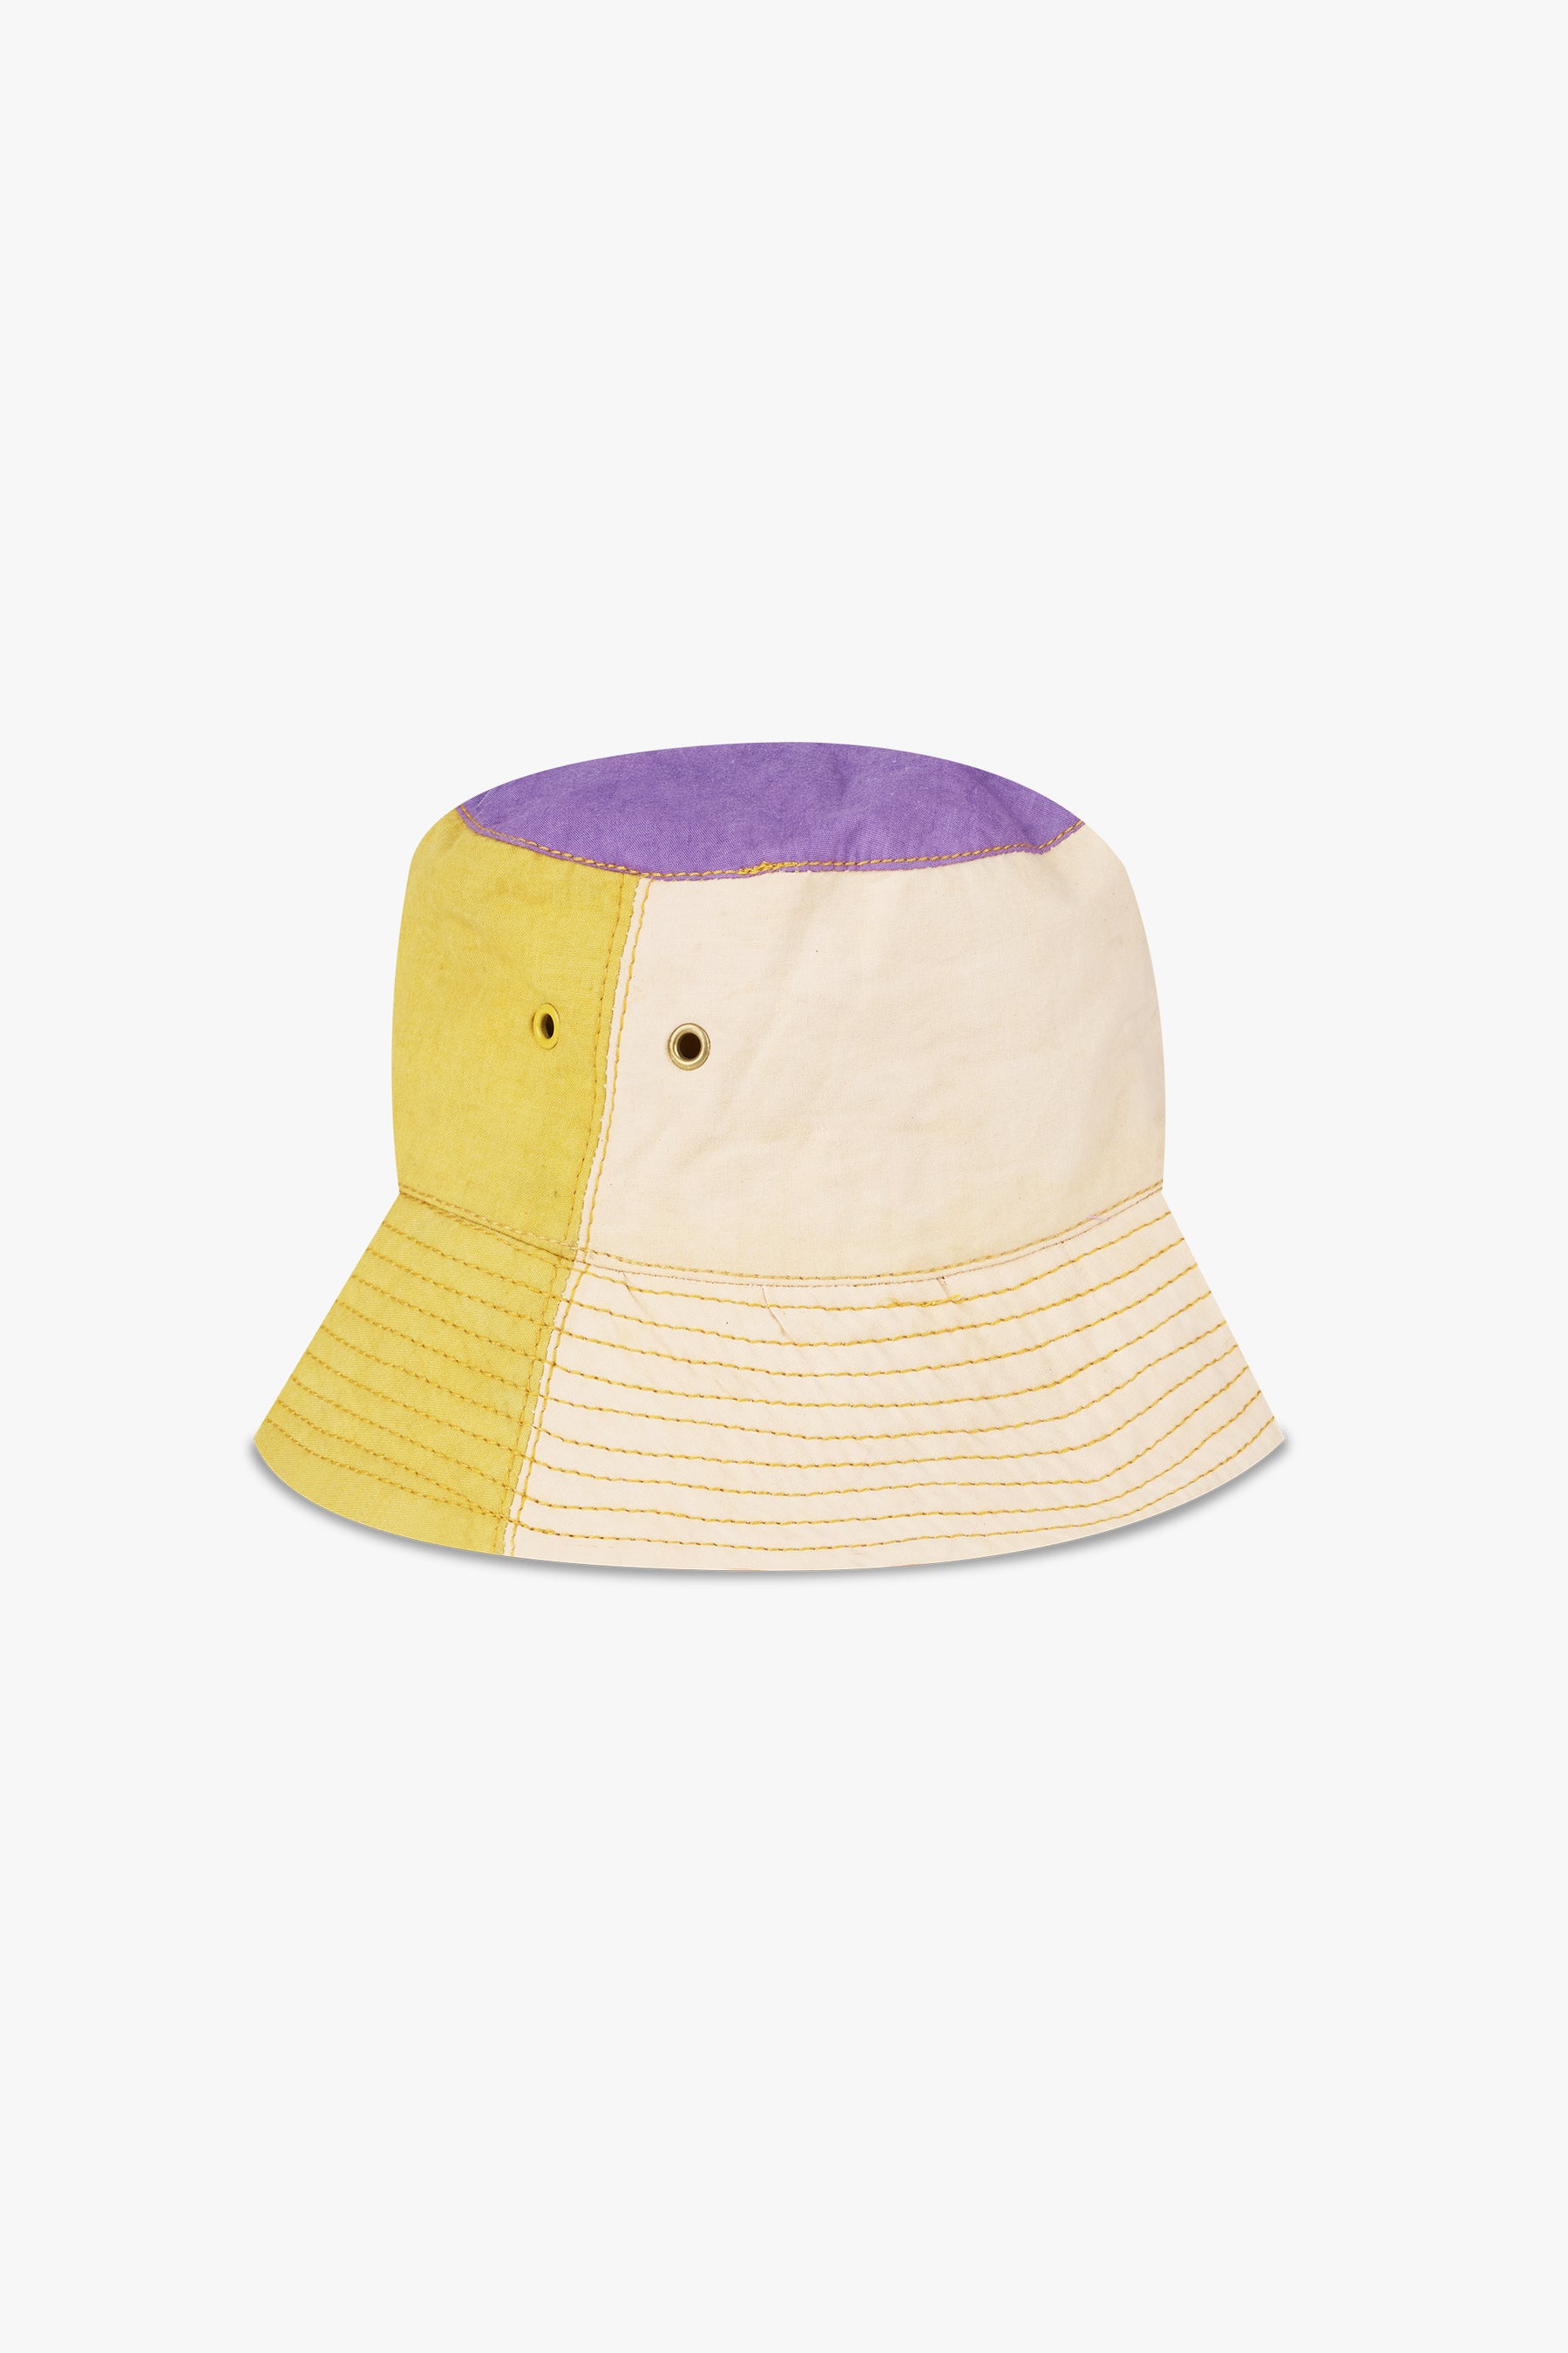 Patchwork Bucket Hat Yellow/Purple